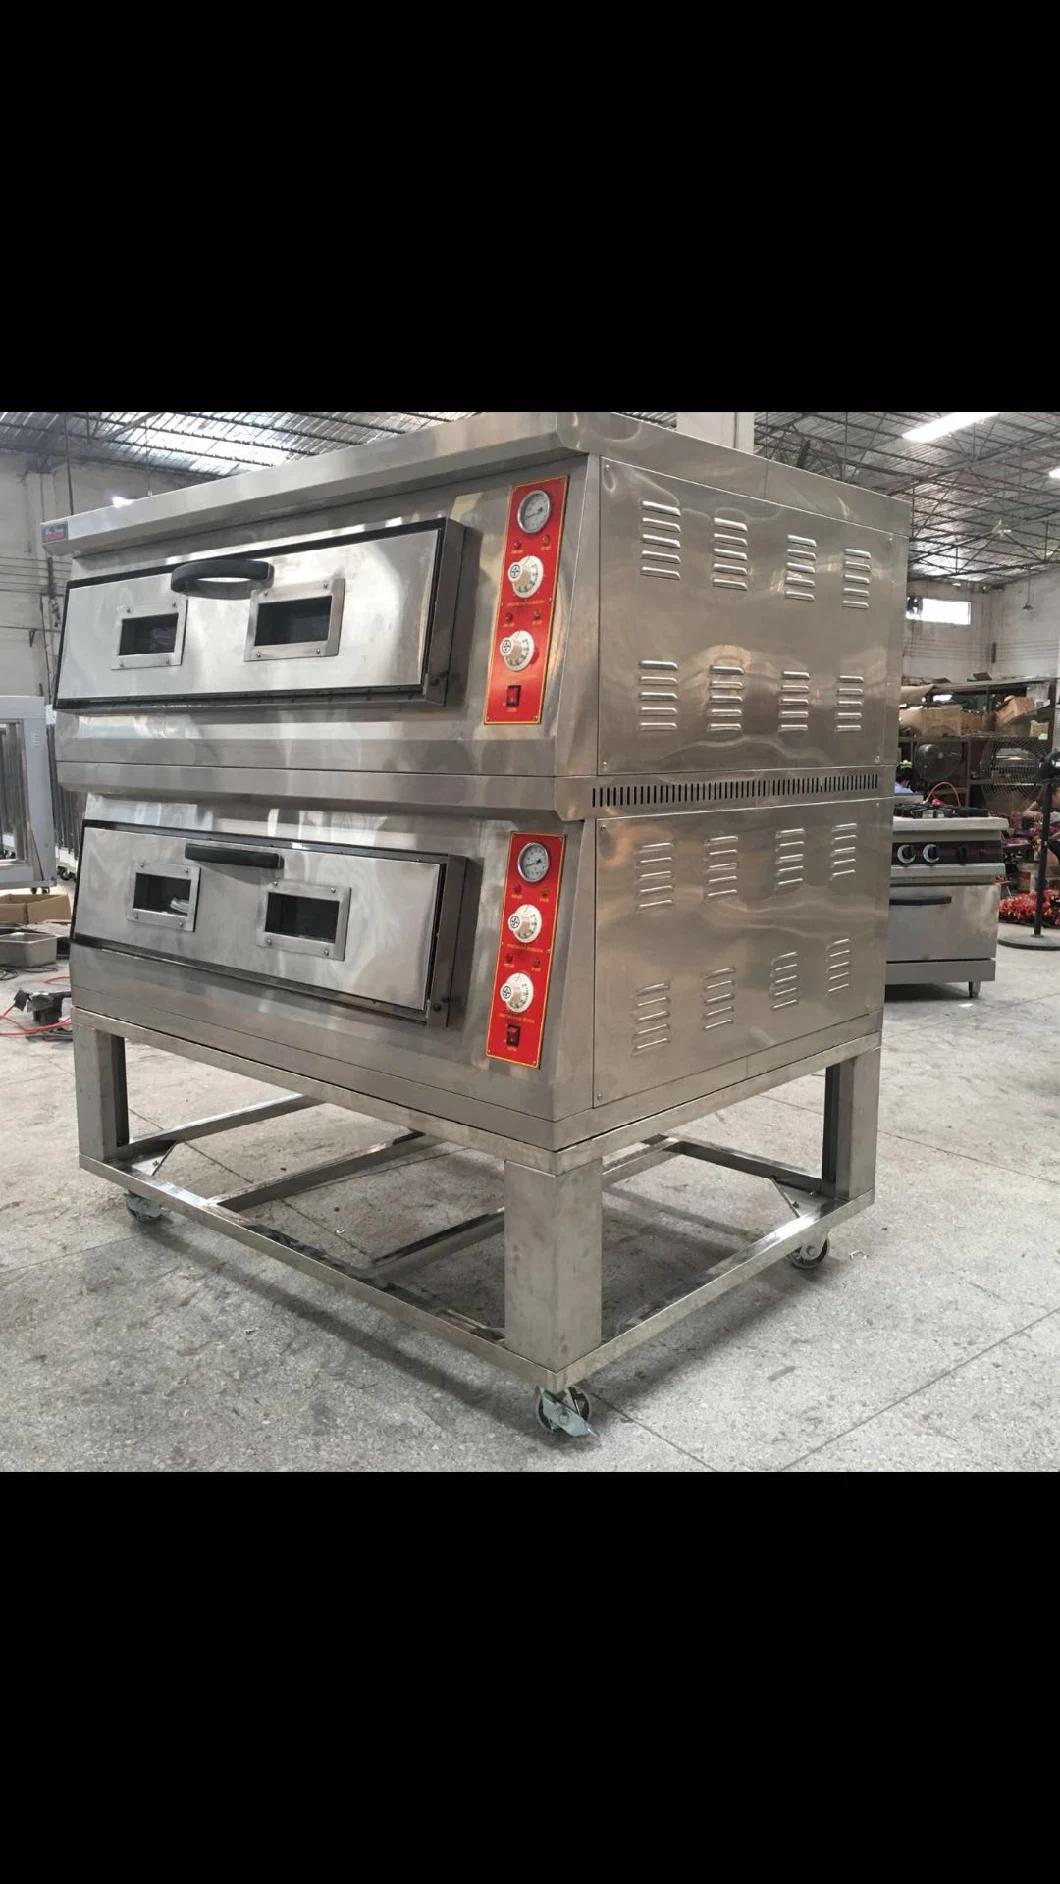 Electric Pizza Bread Baking Machine Bakery Equipment